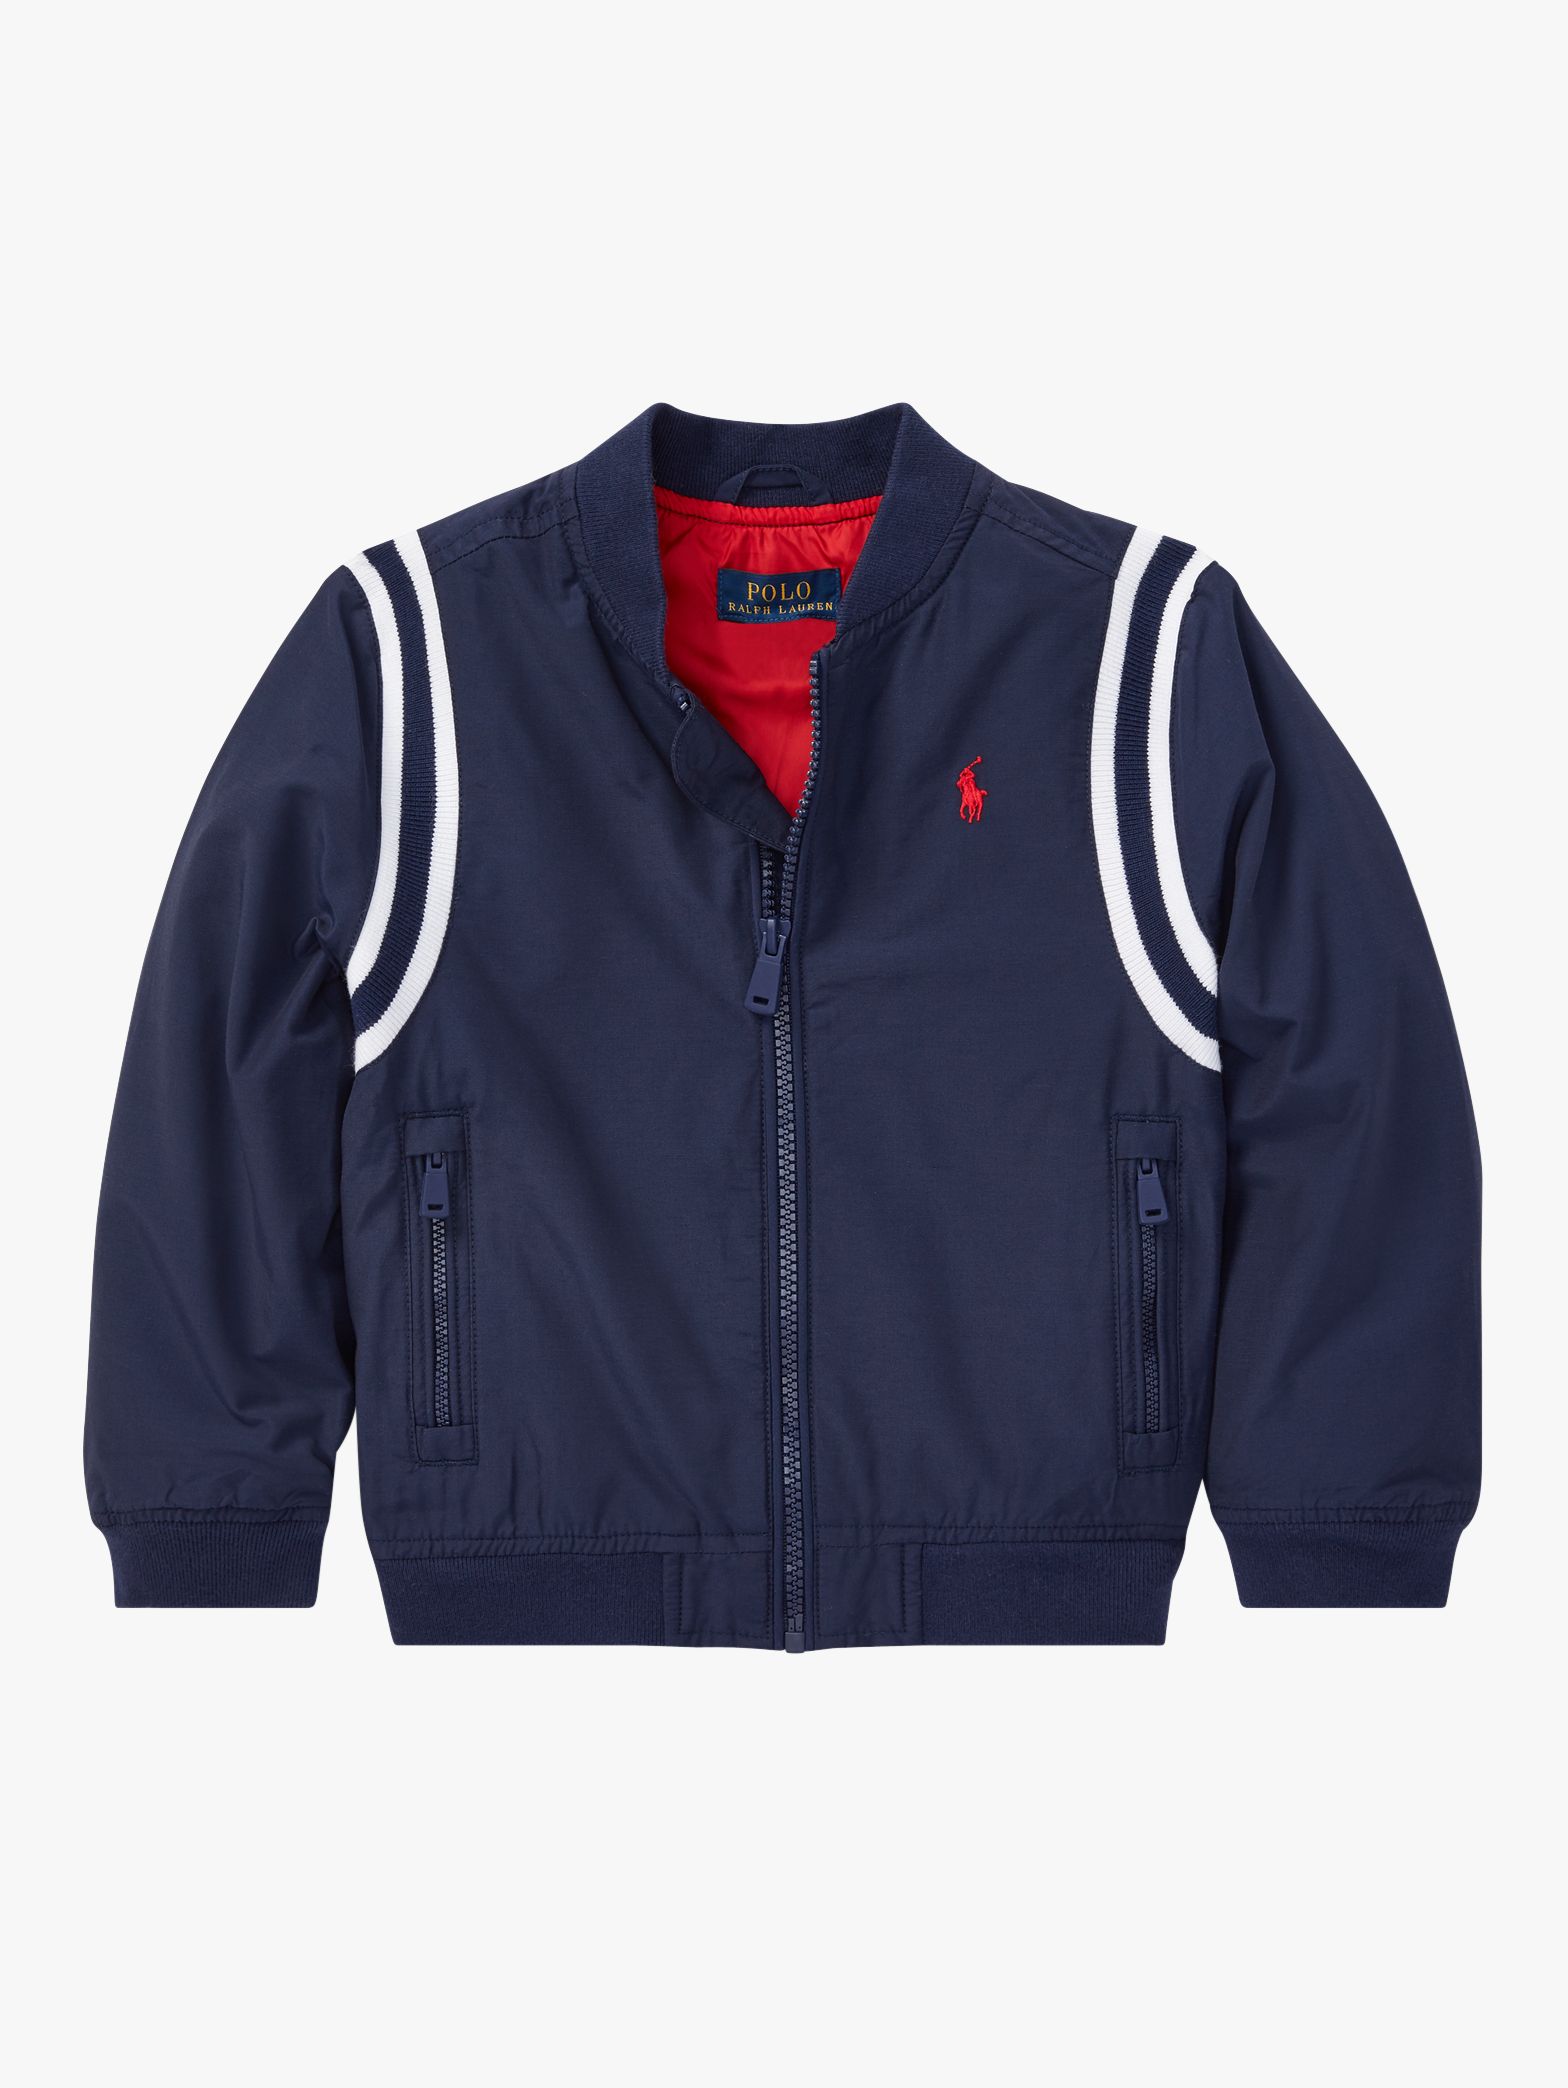 Polo Ralph Lauren Boys' Windbreaker Jacket, Navy